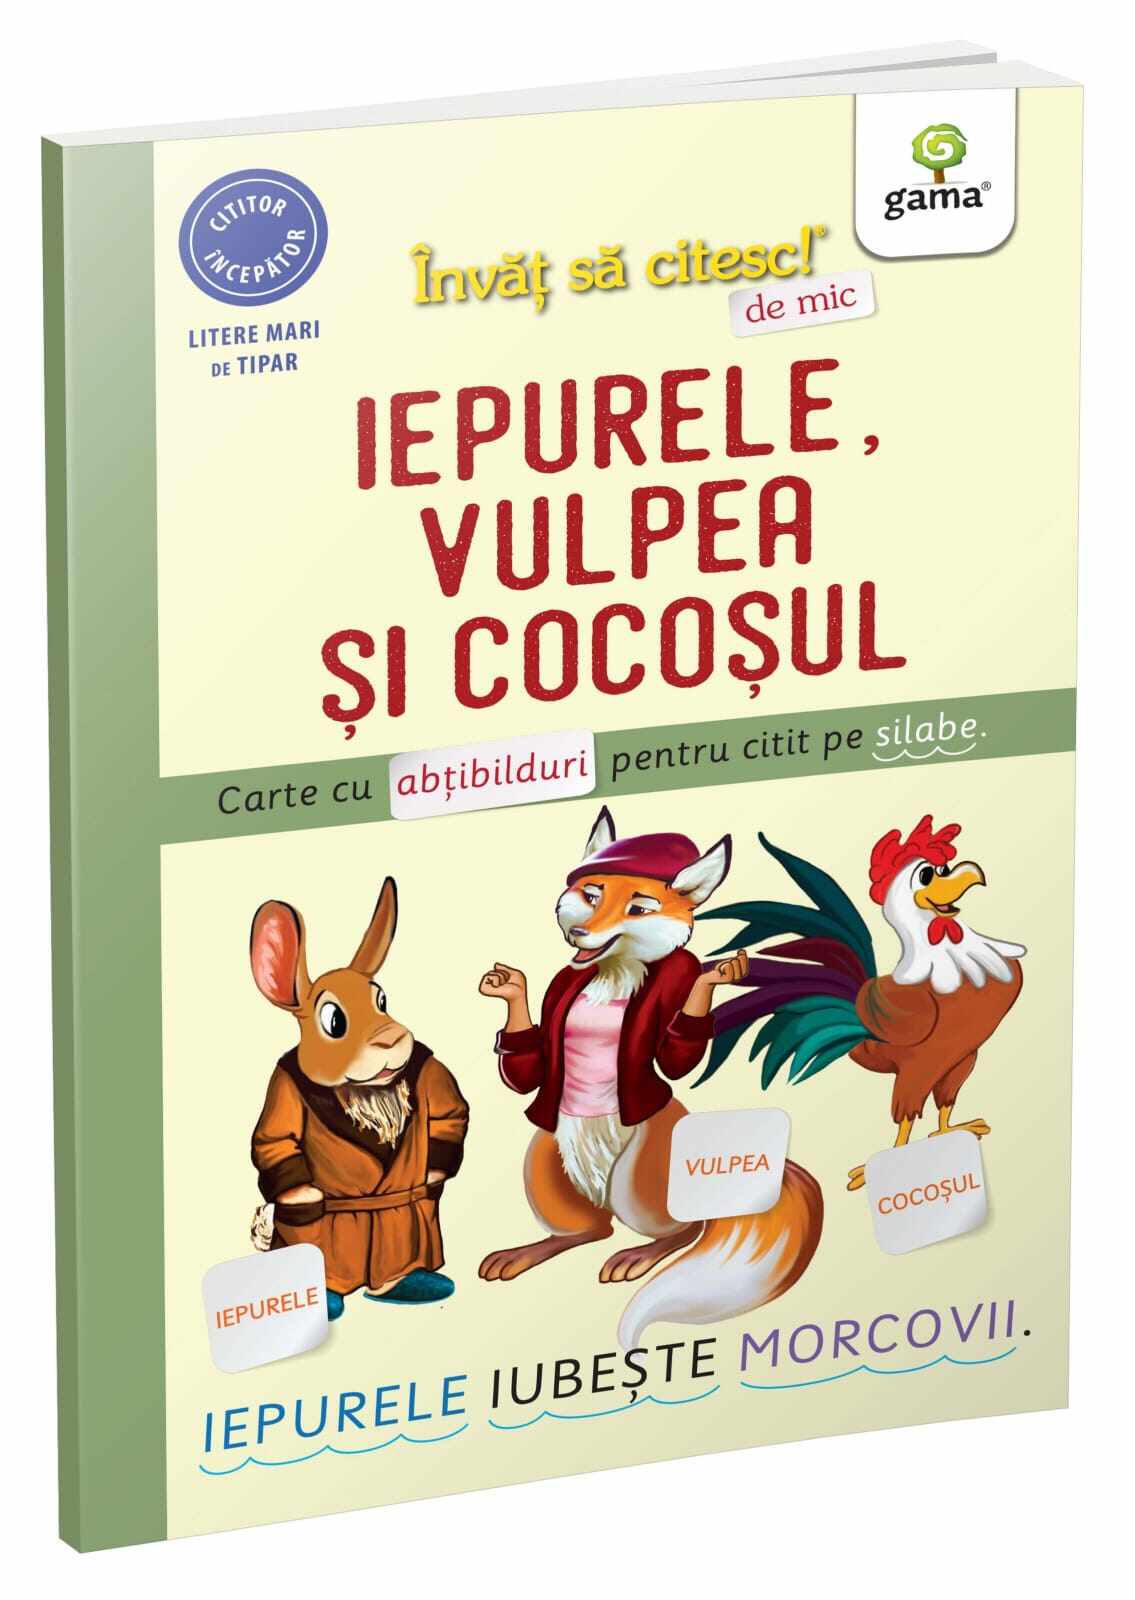 Iepurele, vulpea si cocosul, Editura Gama, 4-5 ani +